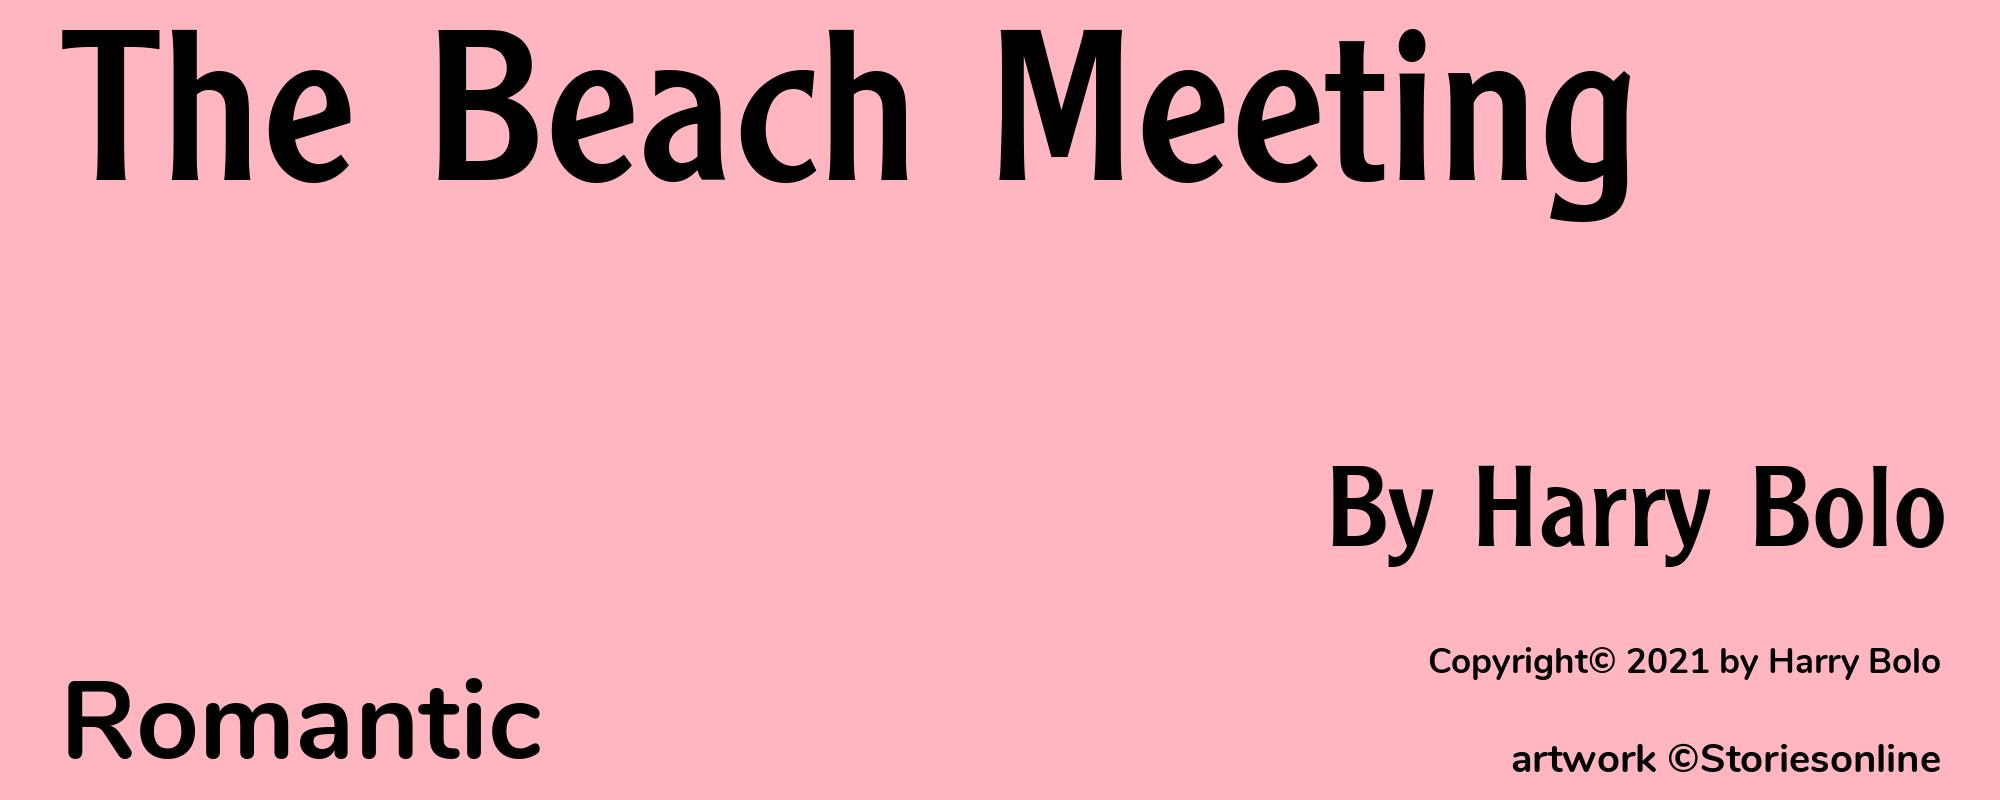 The Beach Meeting - Cover